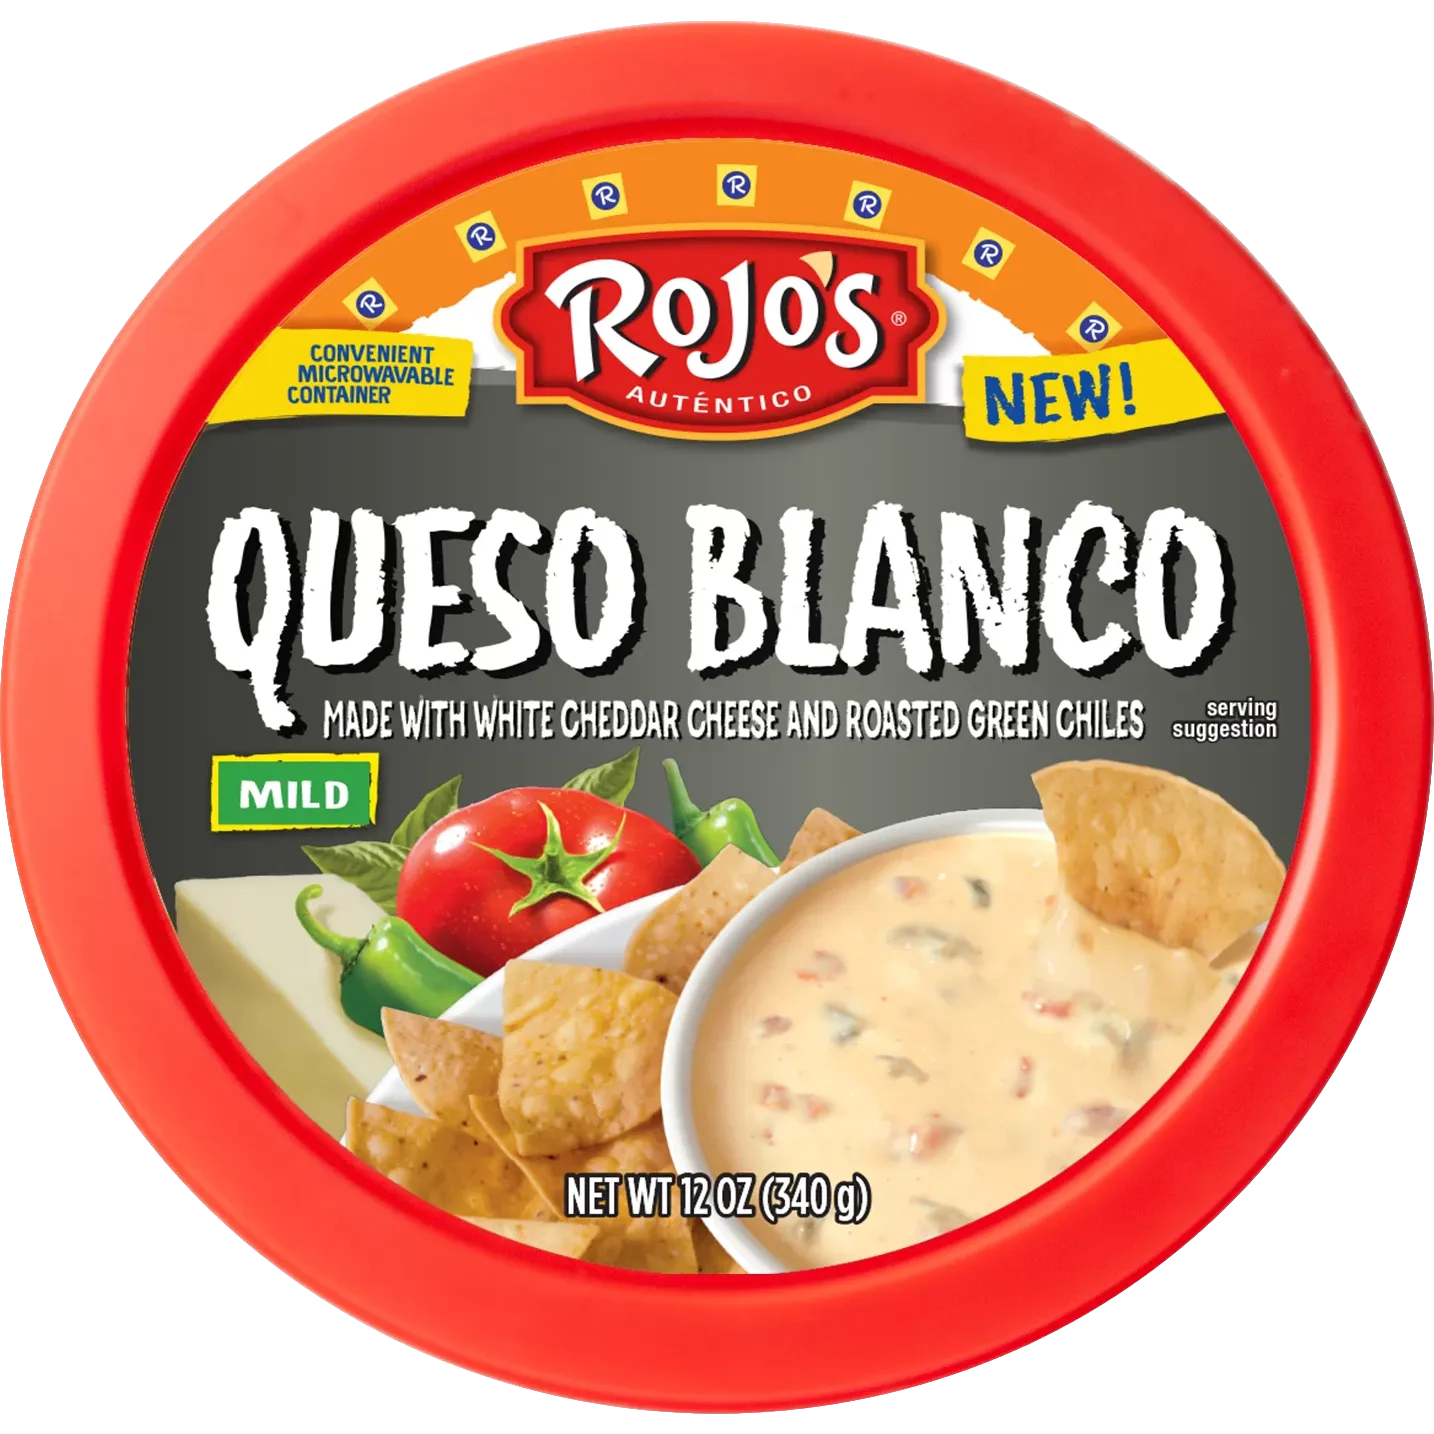 Free Rojos Gluten-Free Mexicali Dip